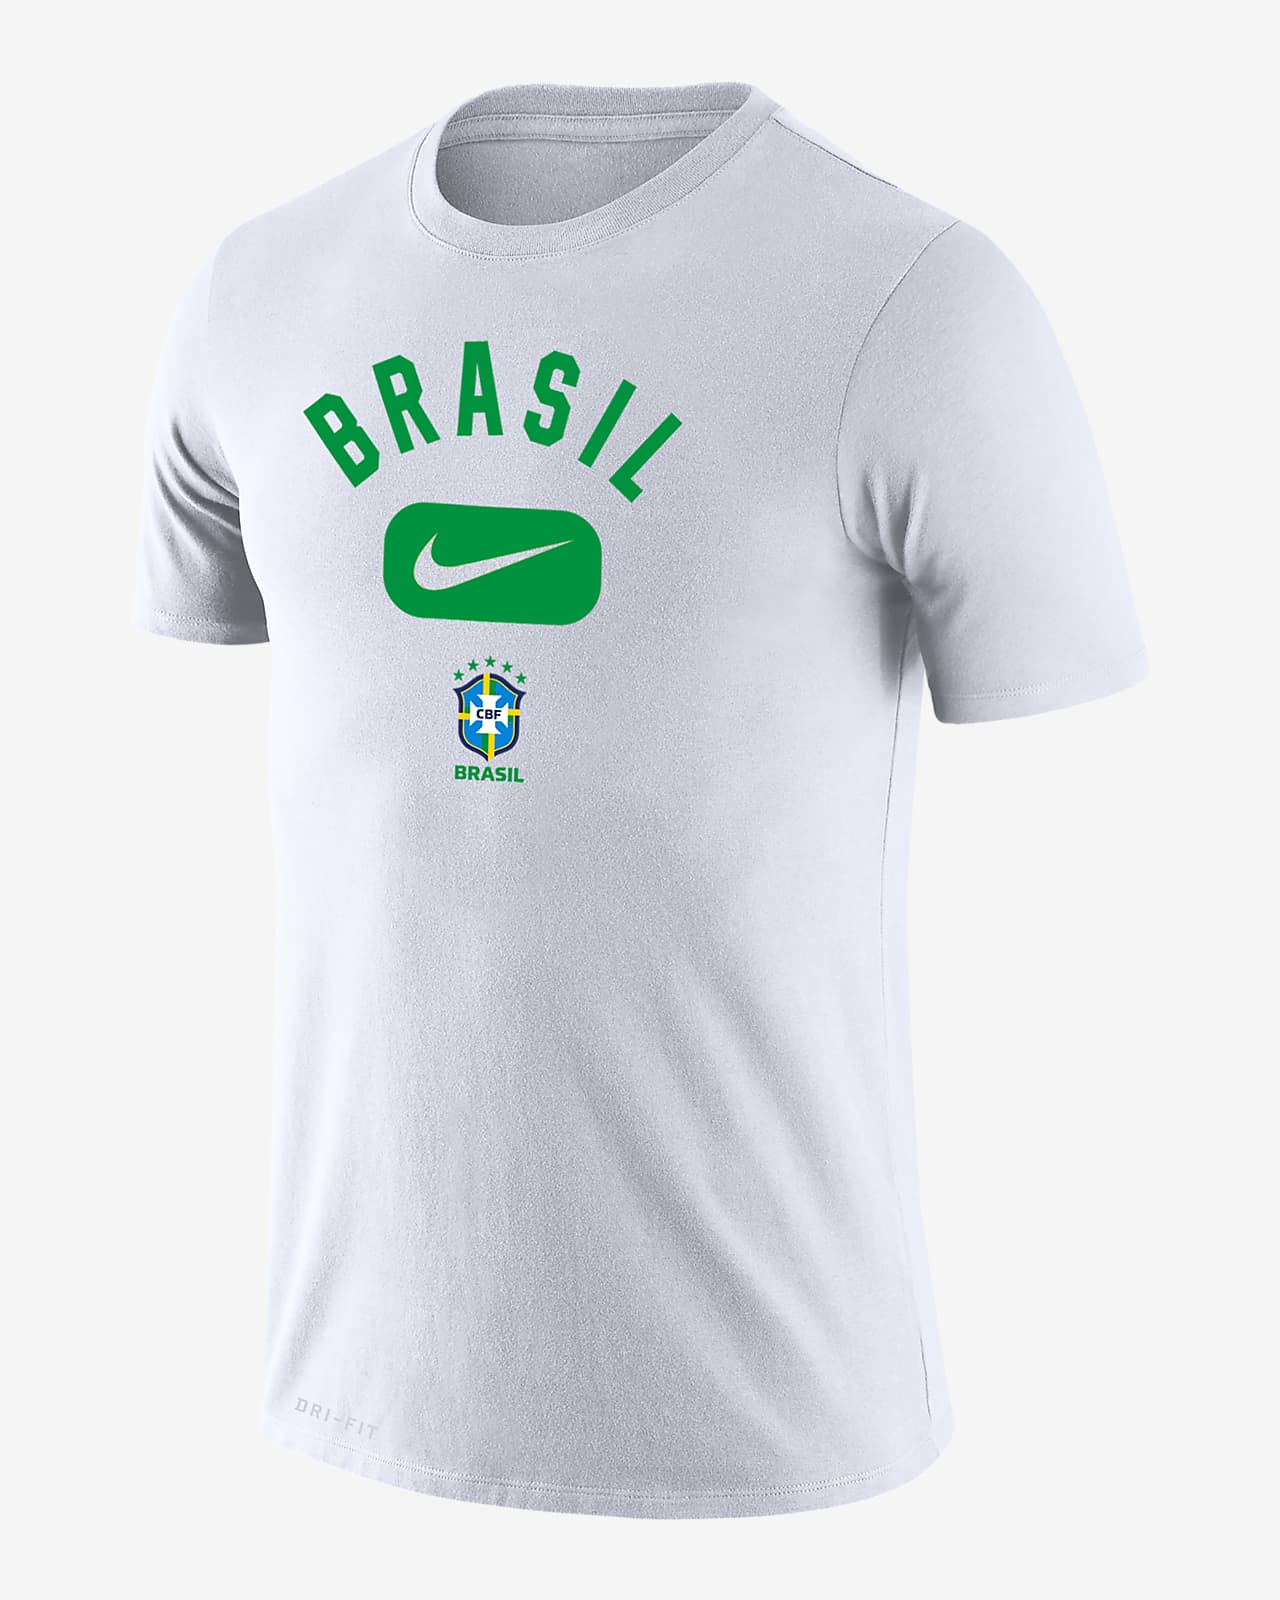 Brazil Legend Men's Nike Dri-FIT T-Shirt